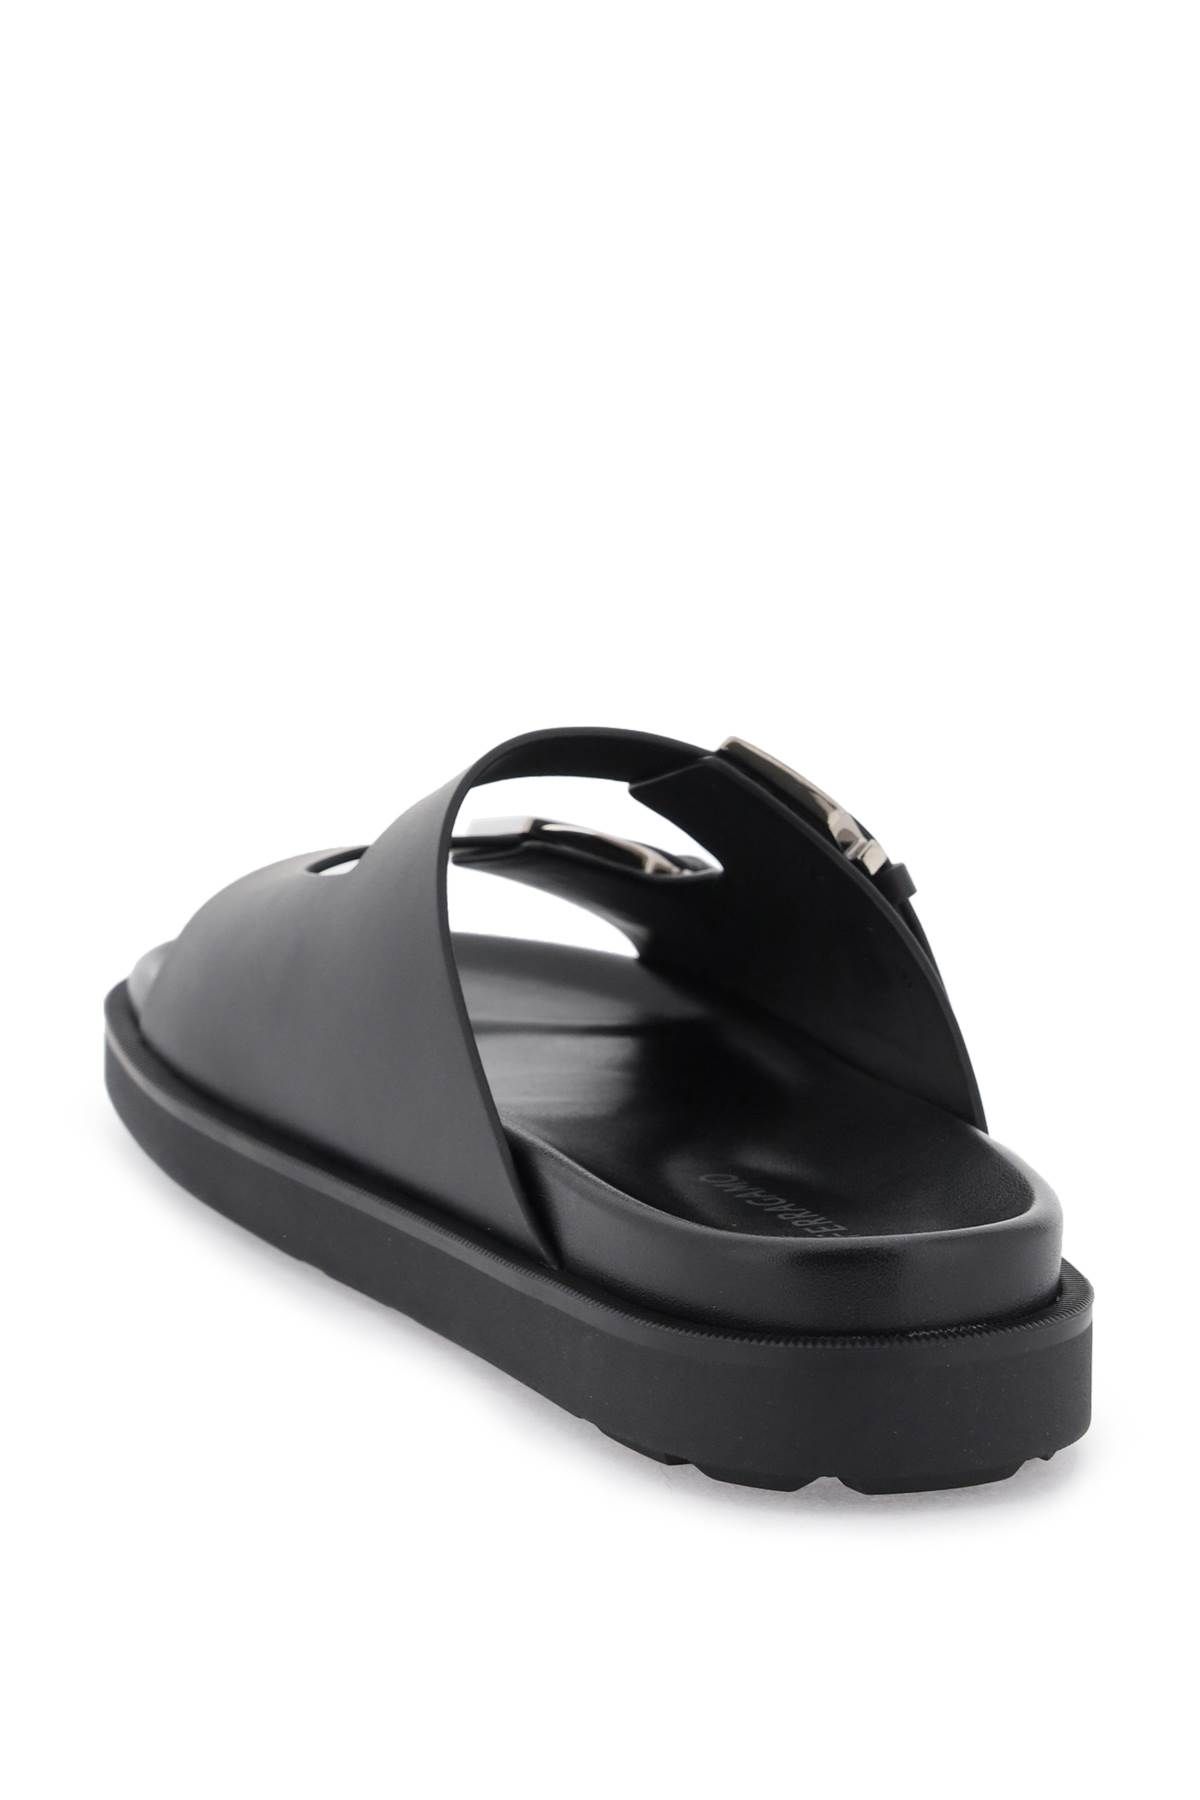 Shop Ferragamo Slides With Gancini Buckles In Black